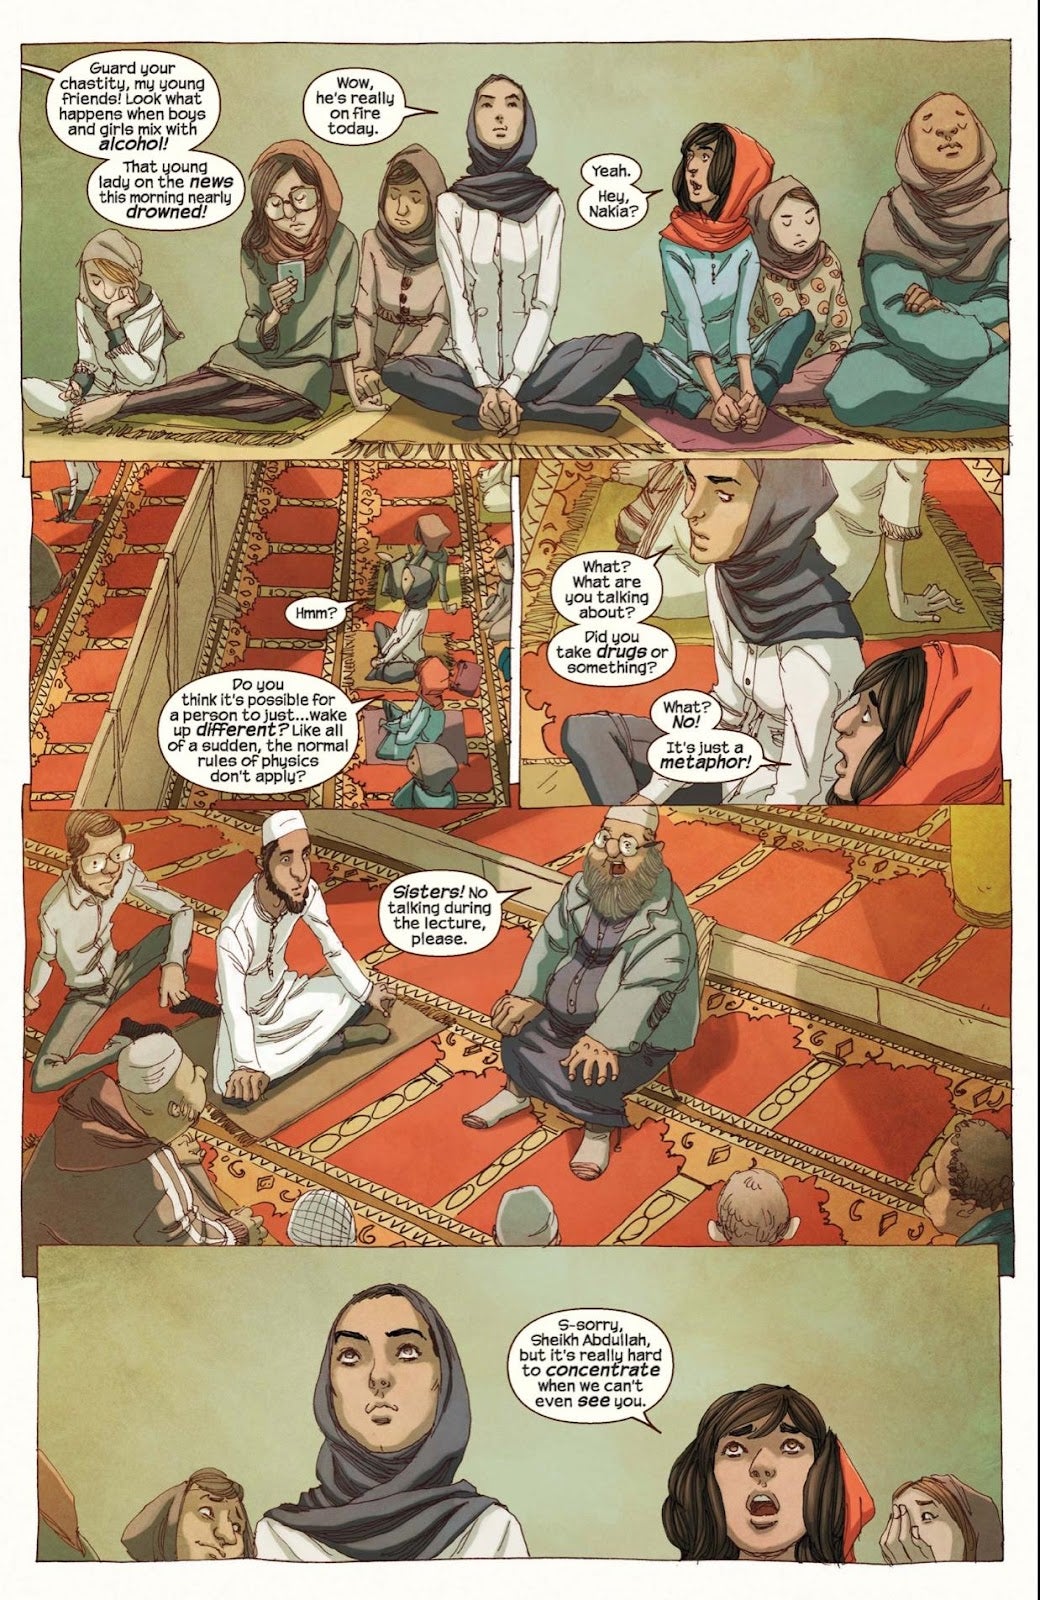 The version of the temple scene we get in 2014's Ms. Marvel #3. (Image: Adrian Alphona, Ian Herring, and Joe Caramagna/Marvel Comics)